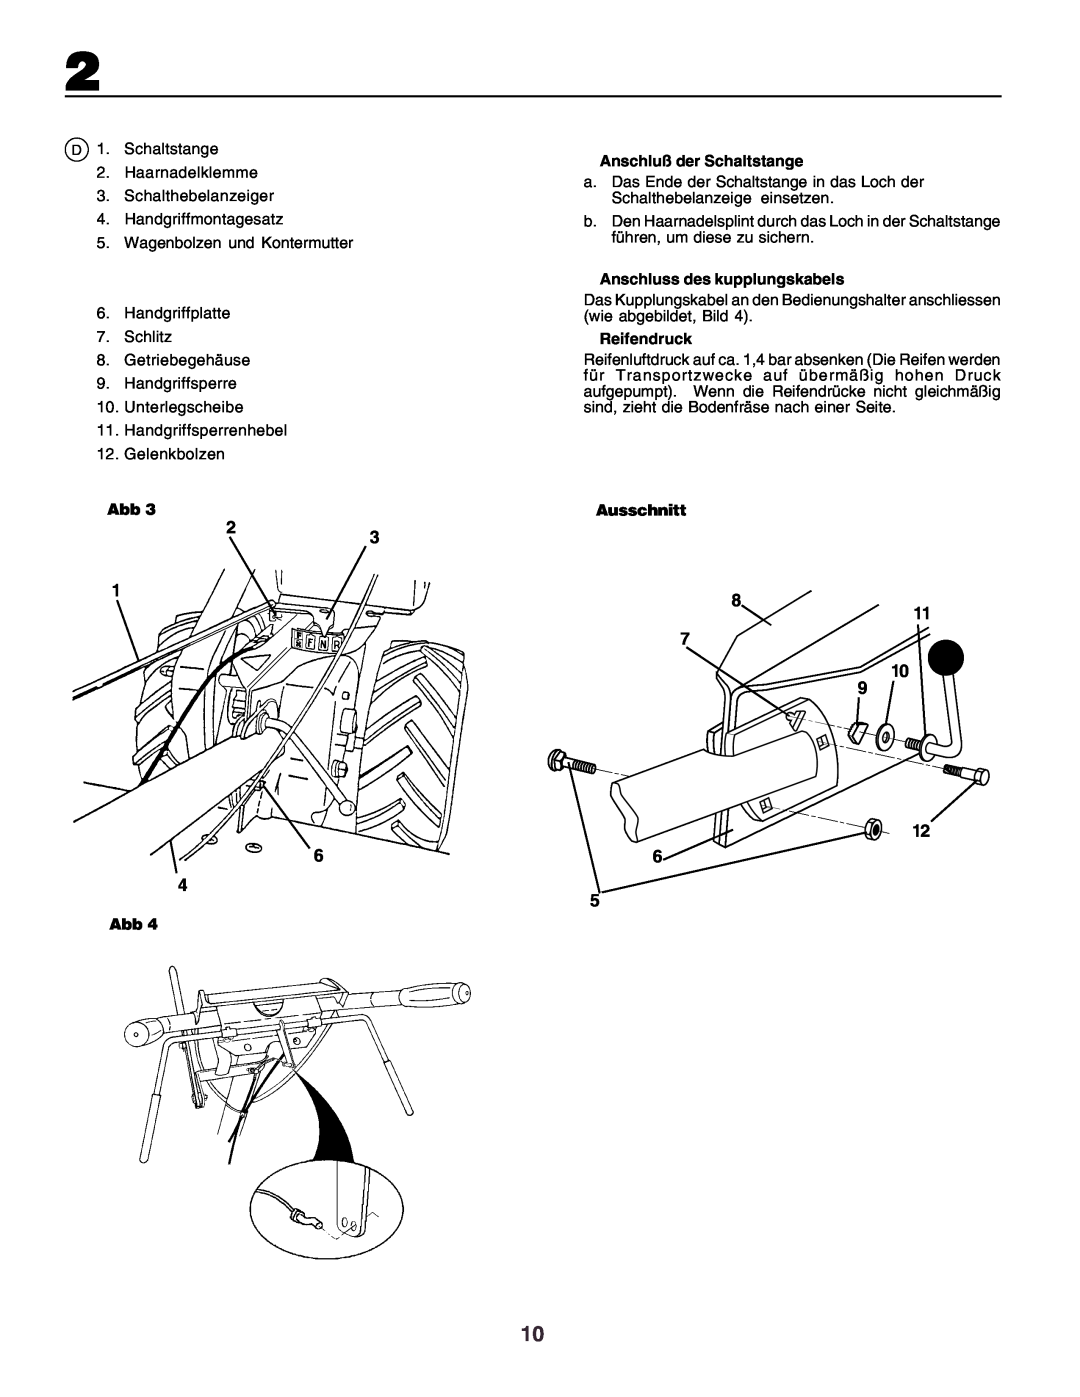 Husqvarna crt51 instruction manual Anschluß der Schaltstange, Anschluss des kupplungskabels, Reifendruck, Ausschnitt 